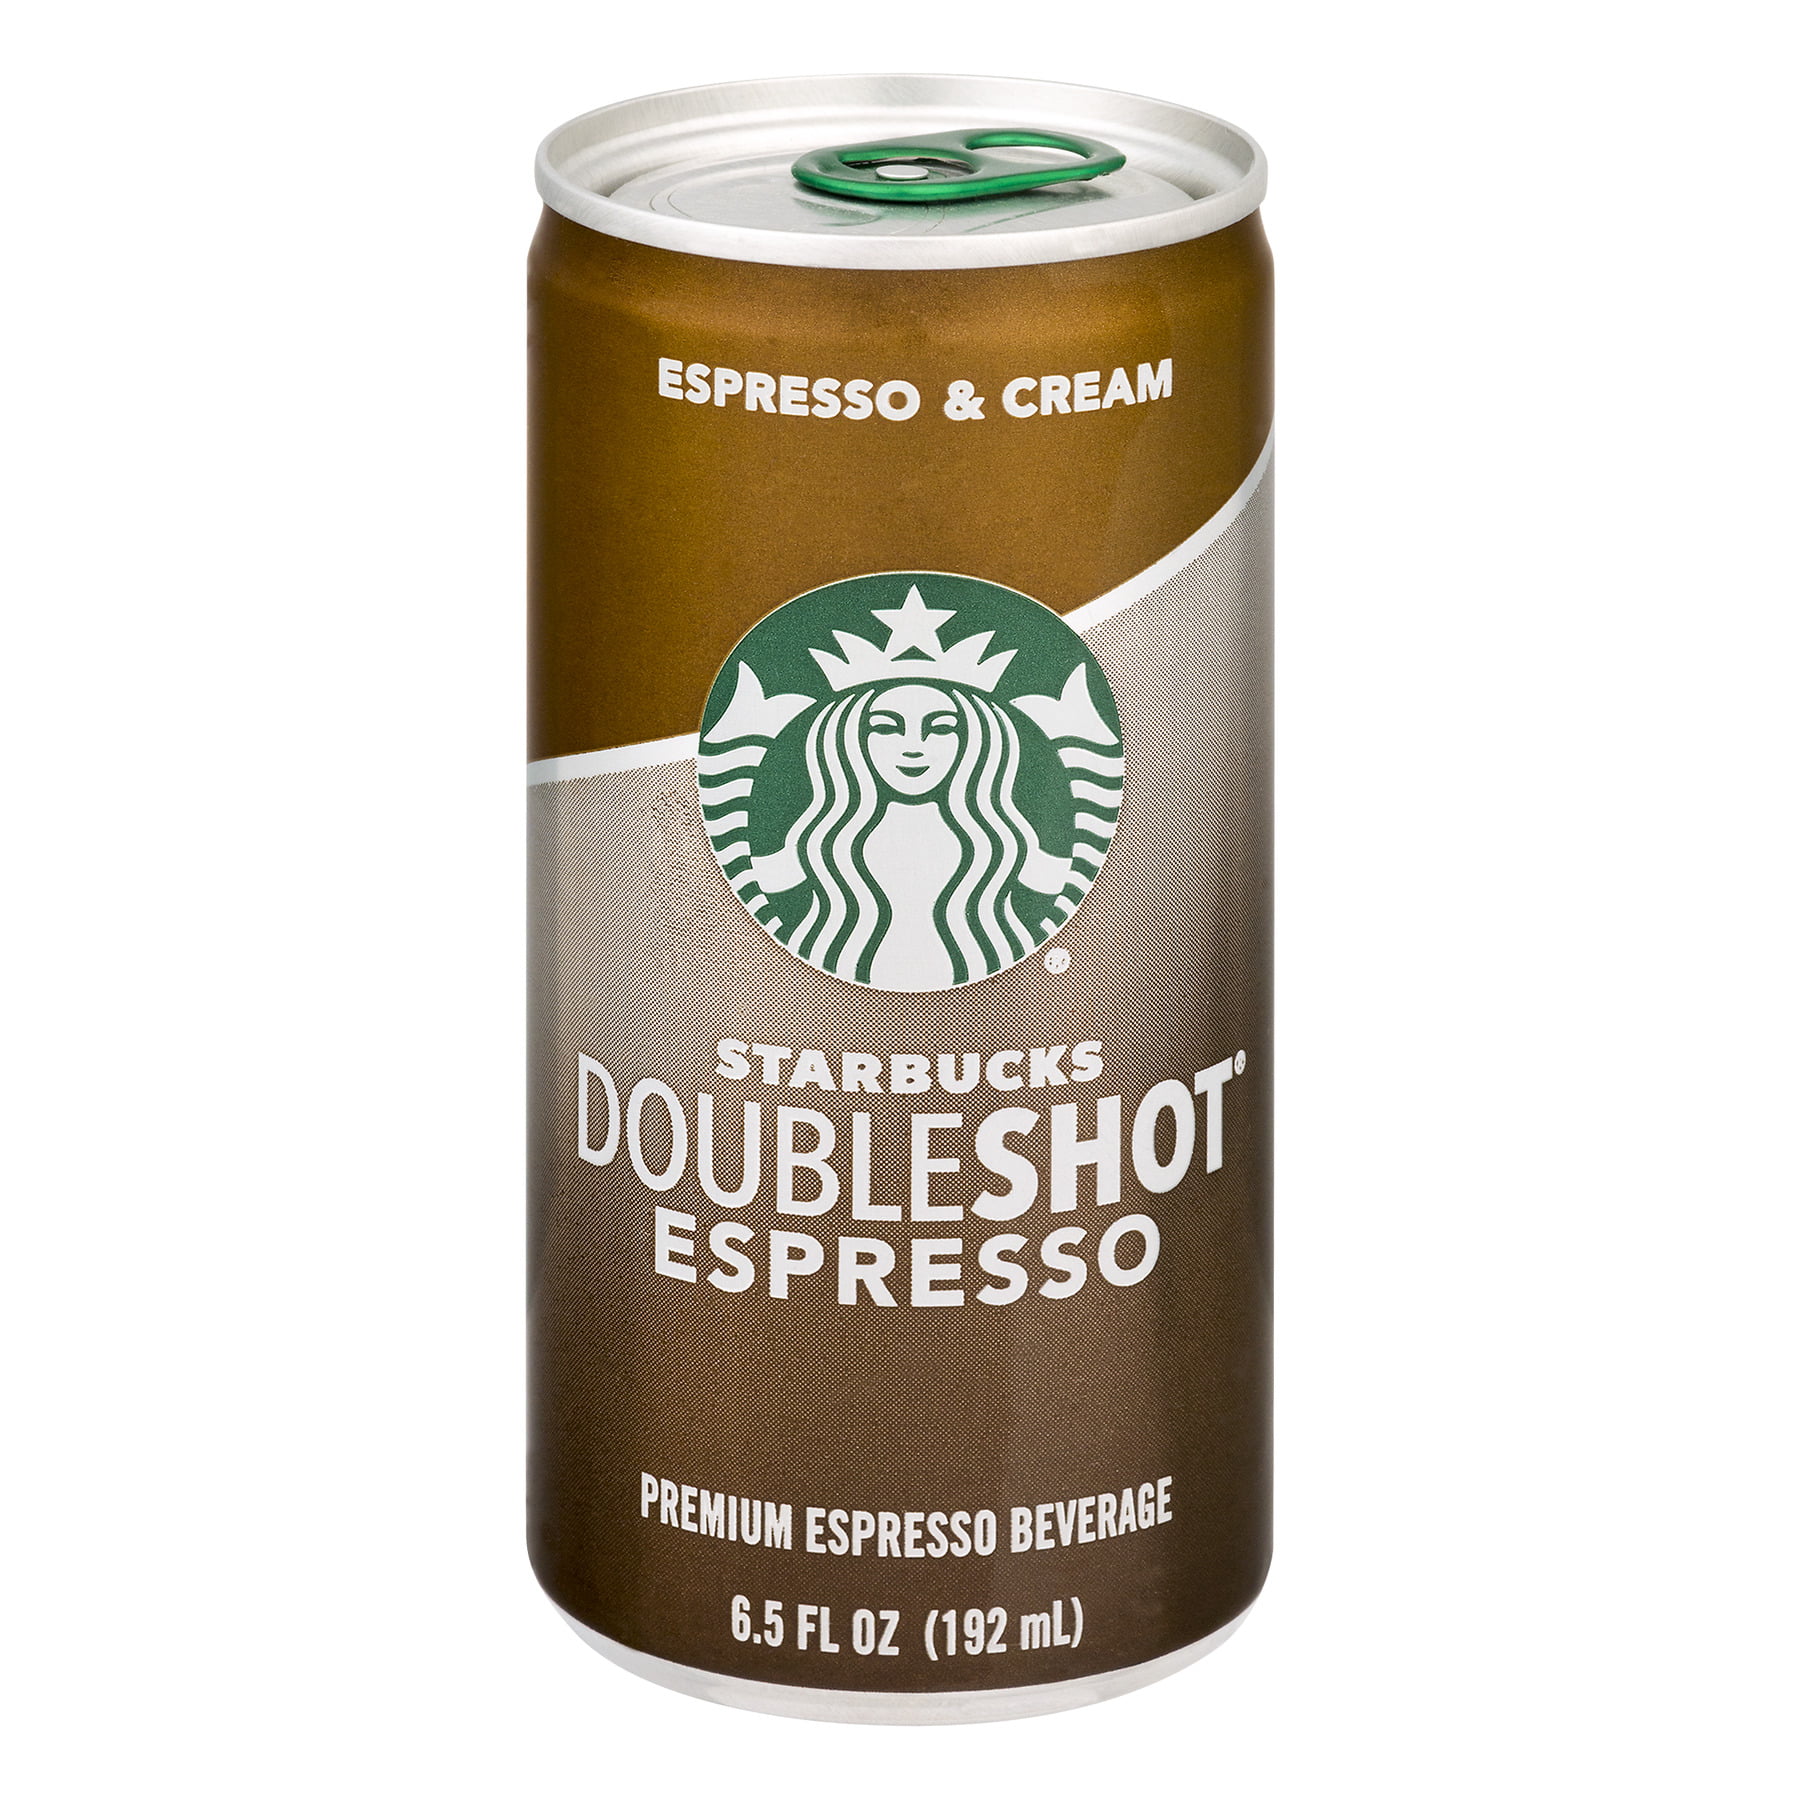 Starbucks Doubleshot Espresso &amp; Cream, 6.5 FL OZ - Walmart.com ...